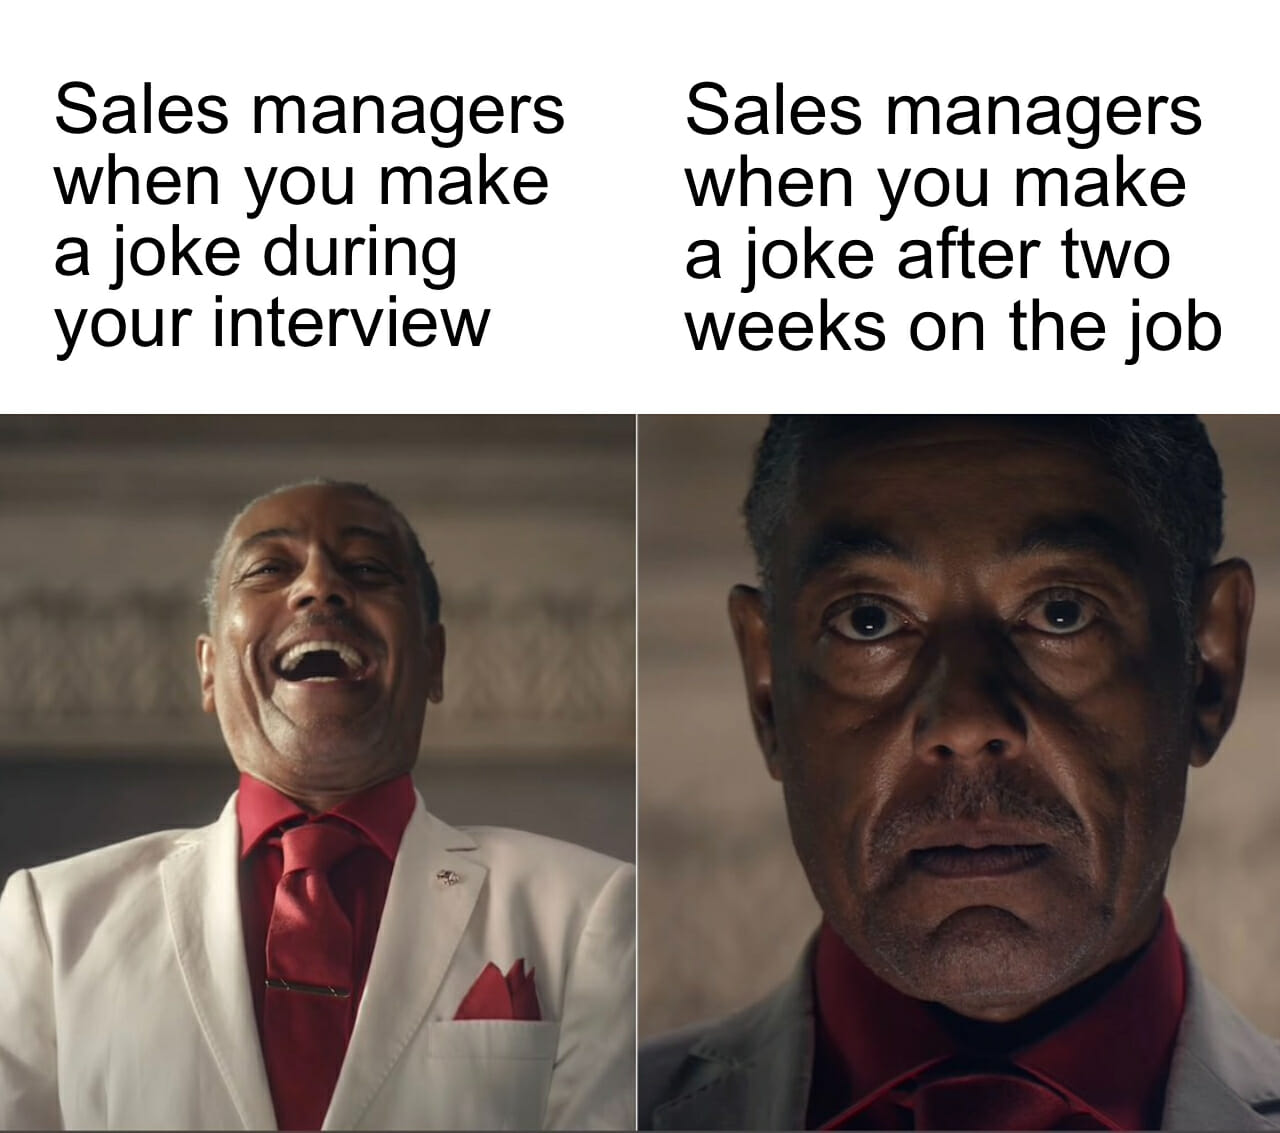 bad salesman meme